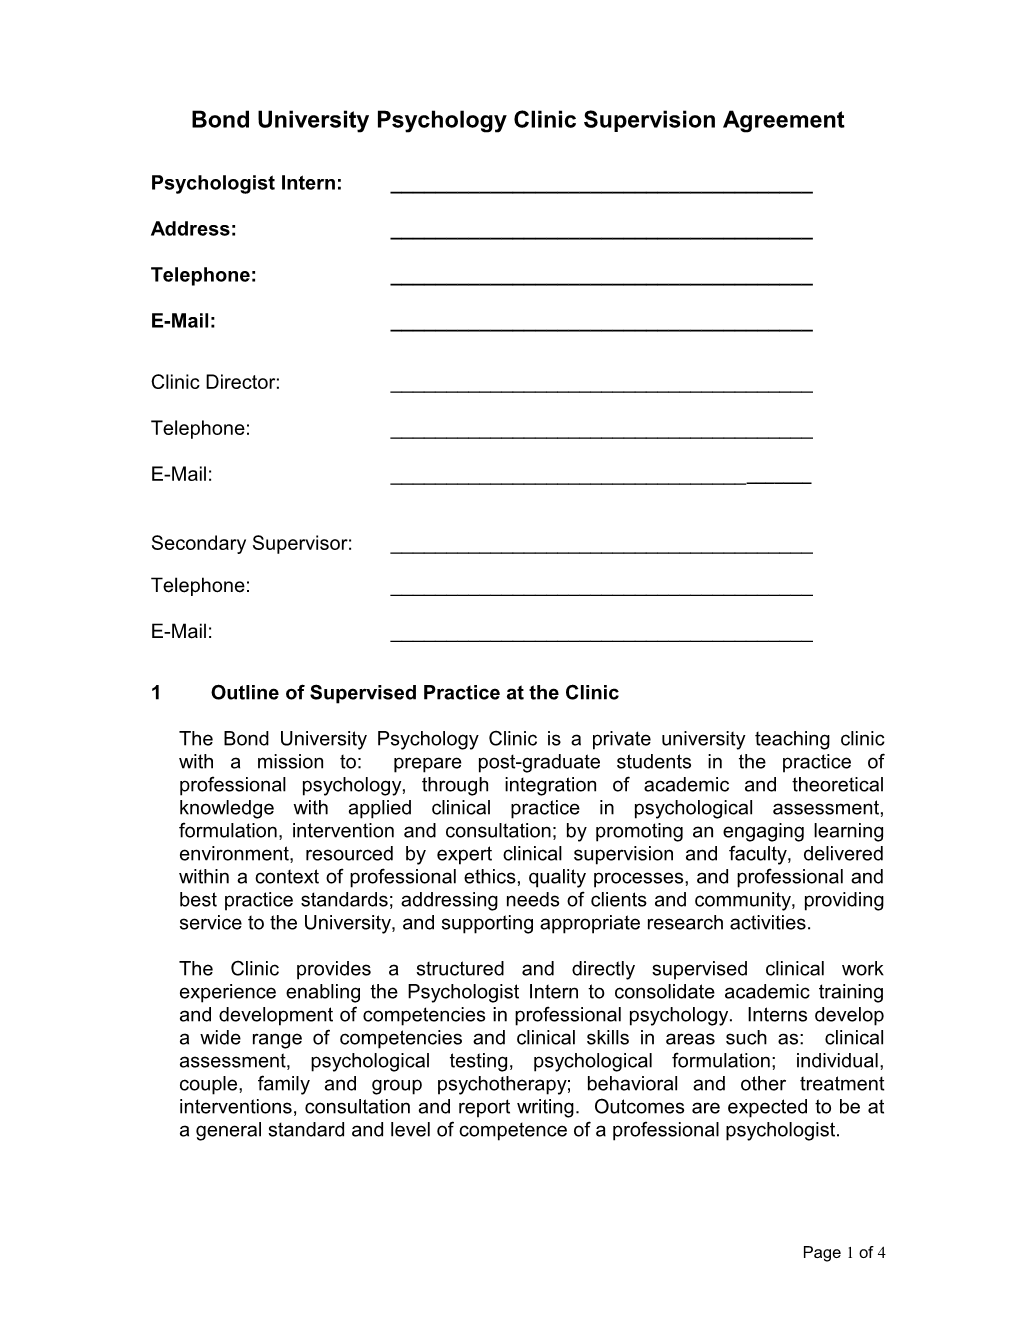 Bond University Psychology Clinic Supervision Agreement